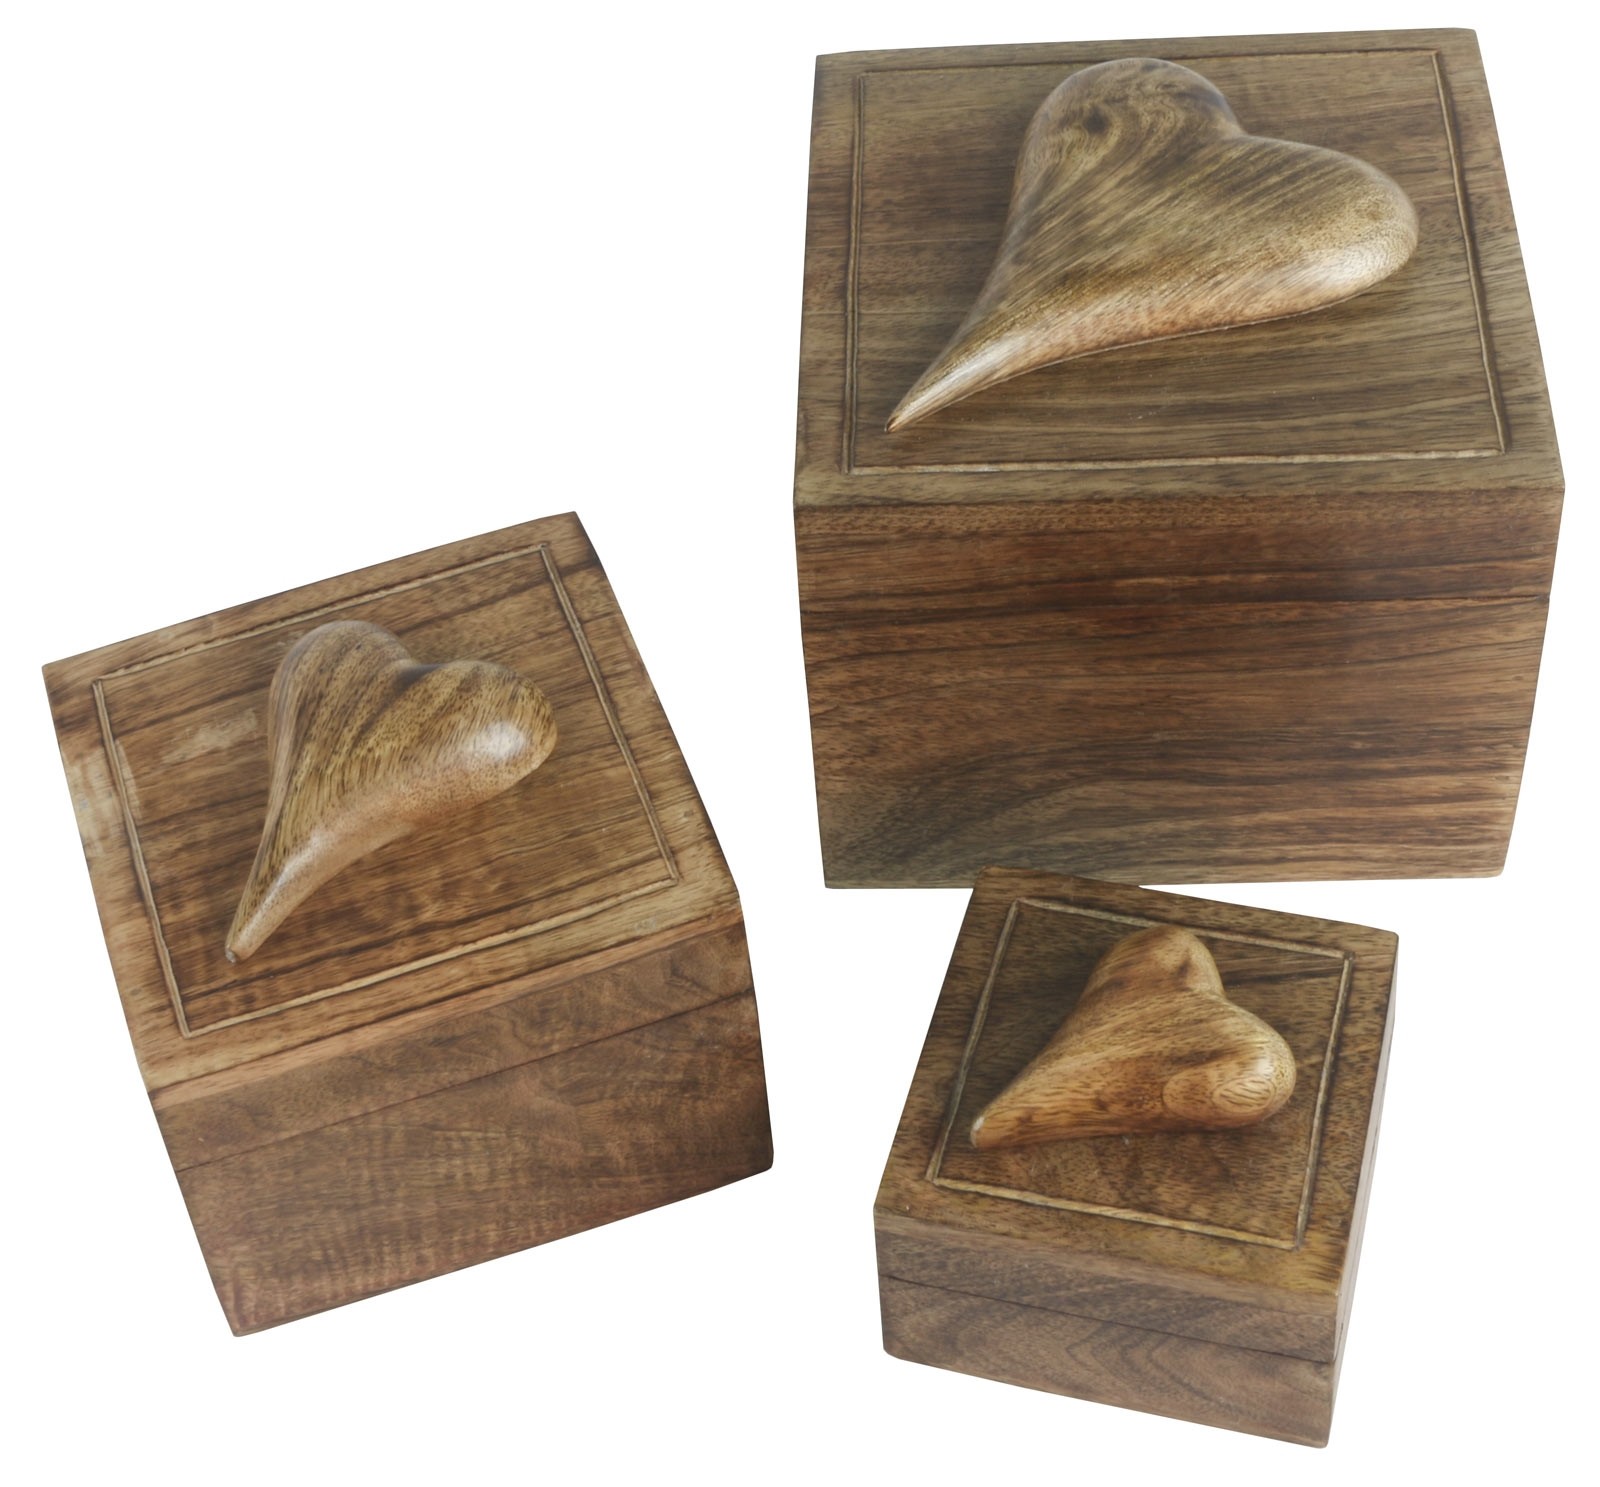 Mango Wood Set Of 3 Square Heart Boxes  18.2cm